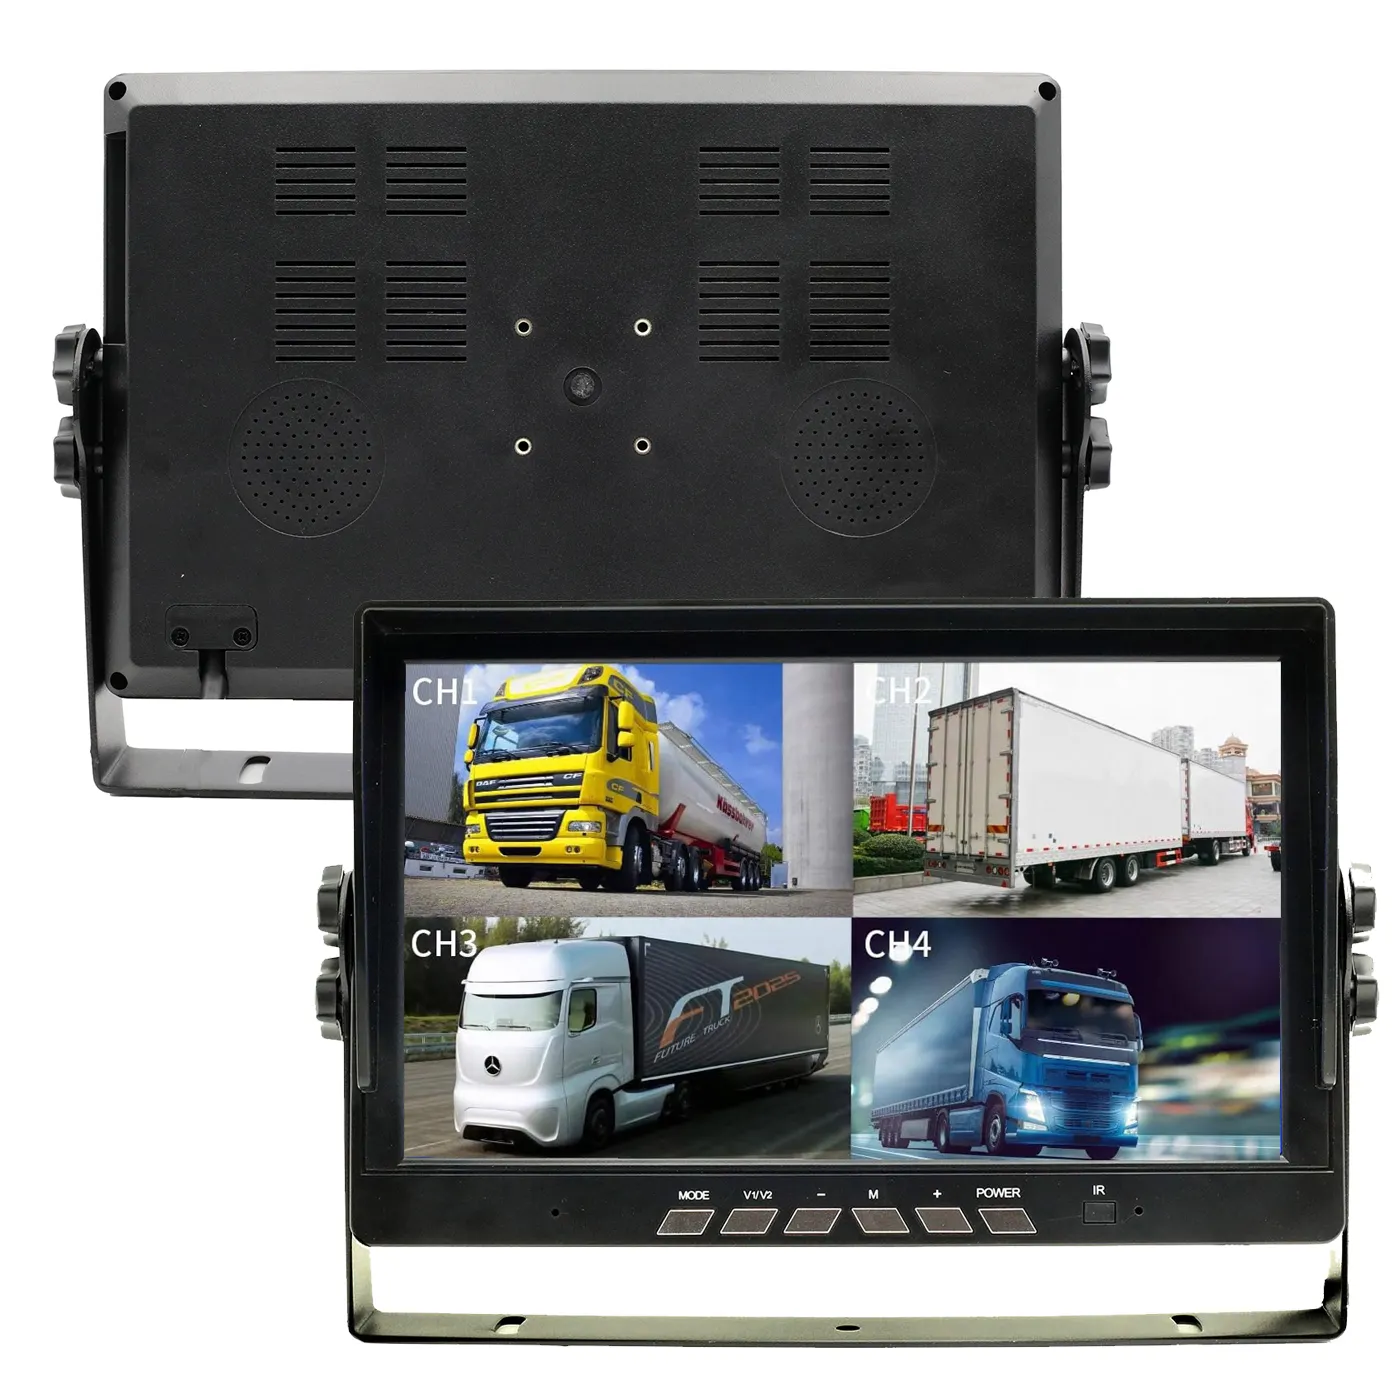 Monitor spion kendaraan, layar LCD TFT 7 inci 4CH 4CH Split quad AV Video input untuk mobil Bus truk dengan Visor tudung matahari